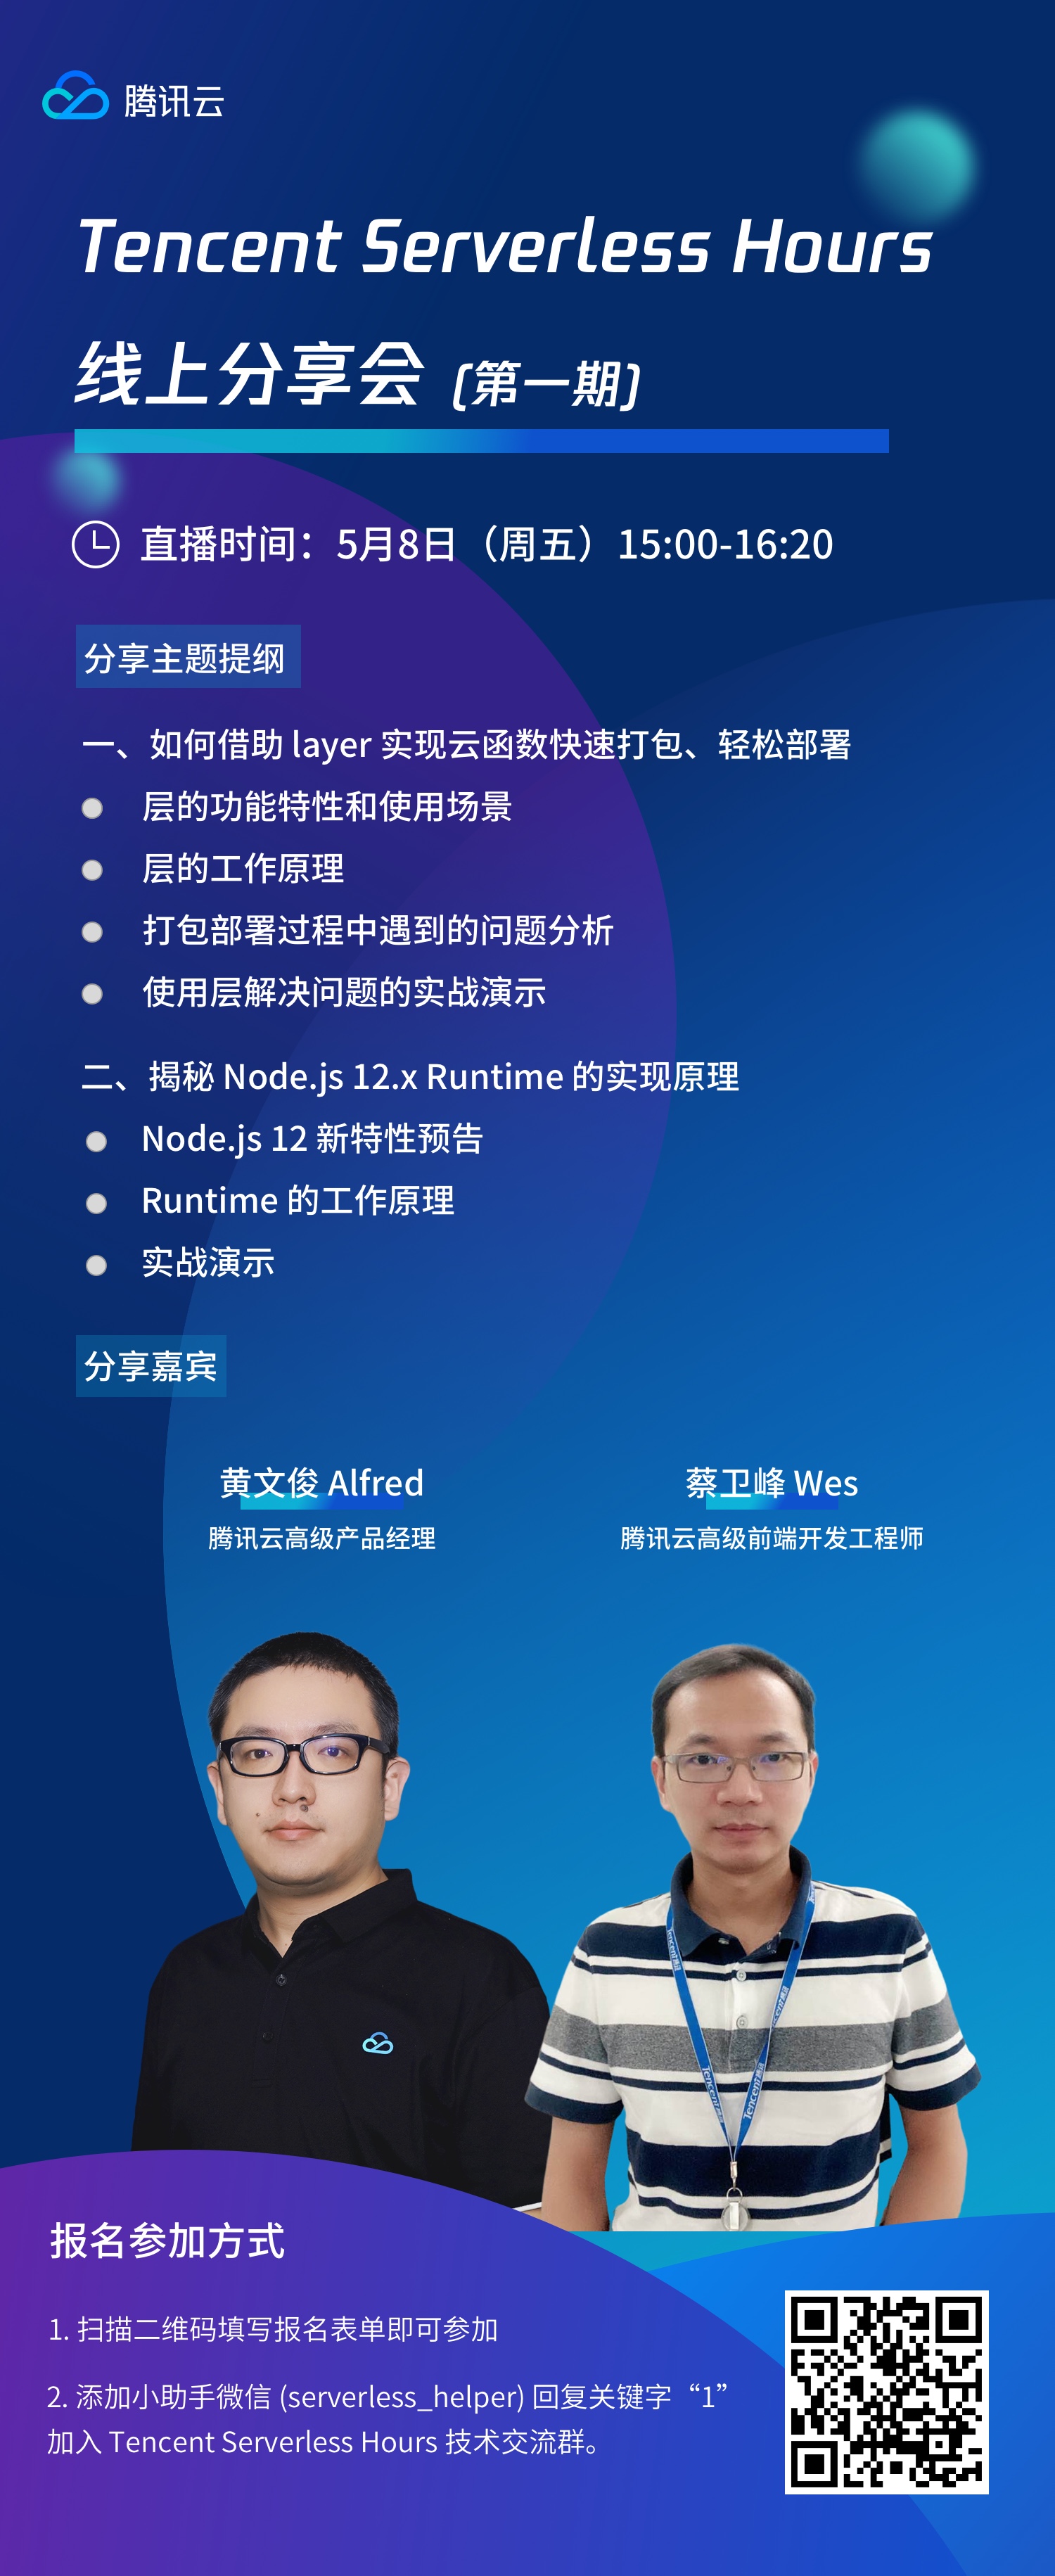 Tencent Serverless Hours 线上分享会第一期即将举办 